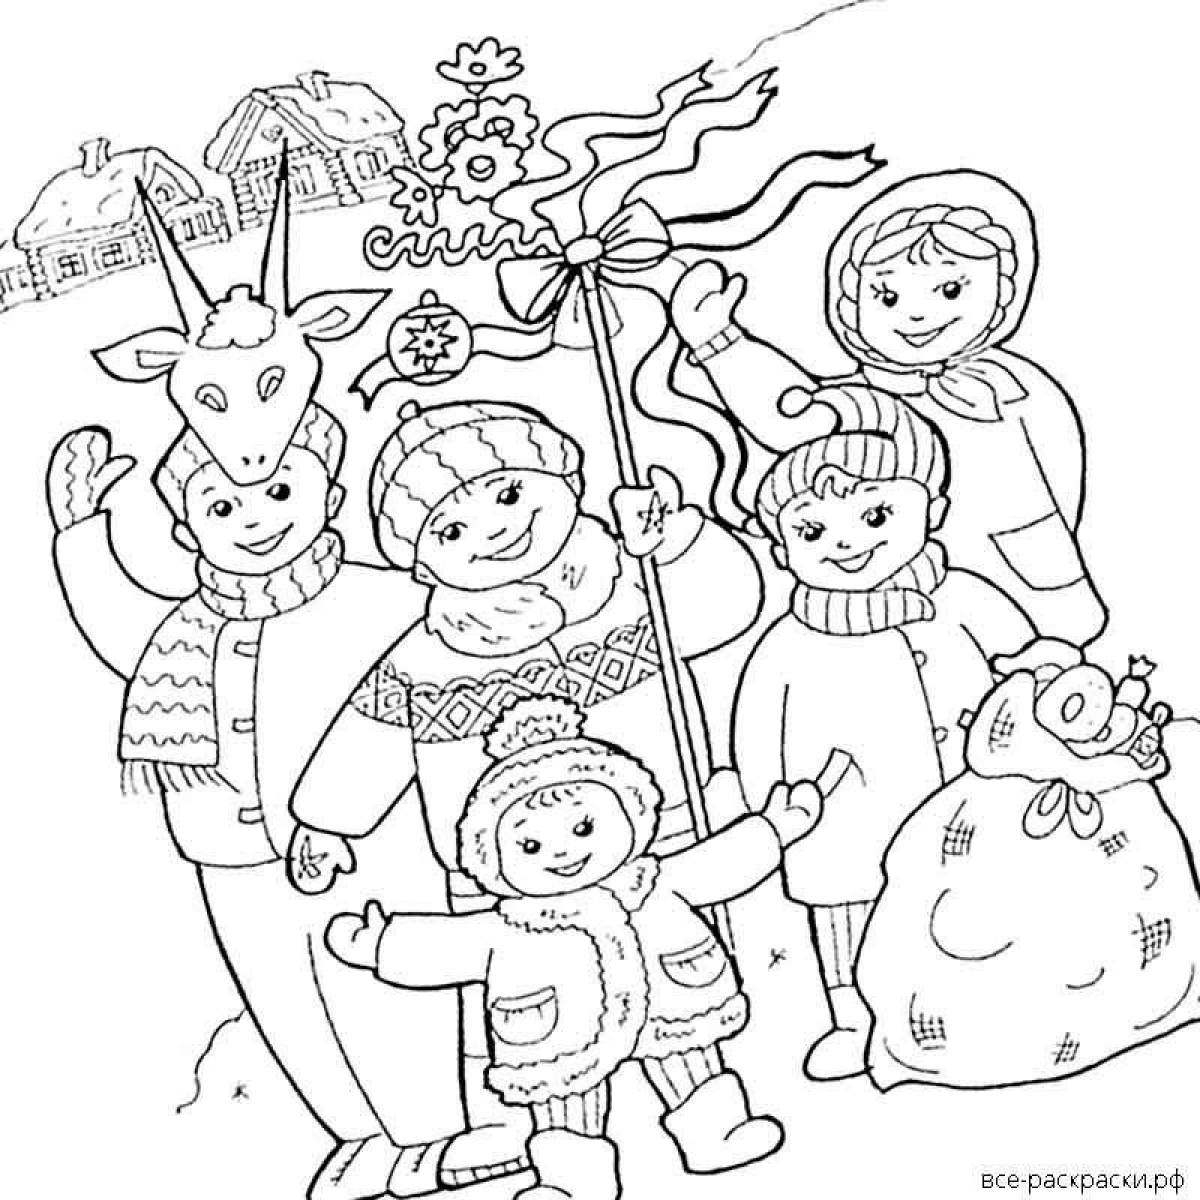 Joyful carnival coloring for kids